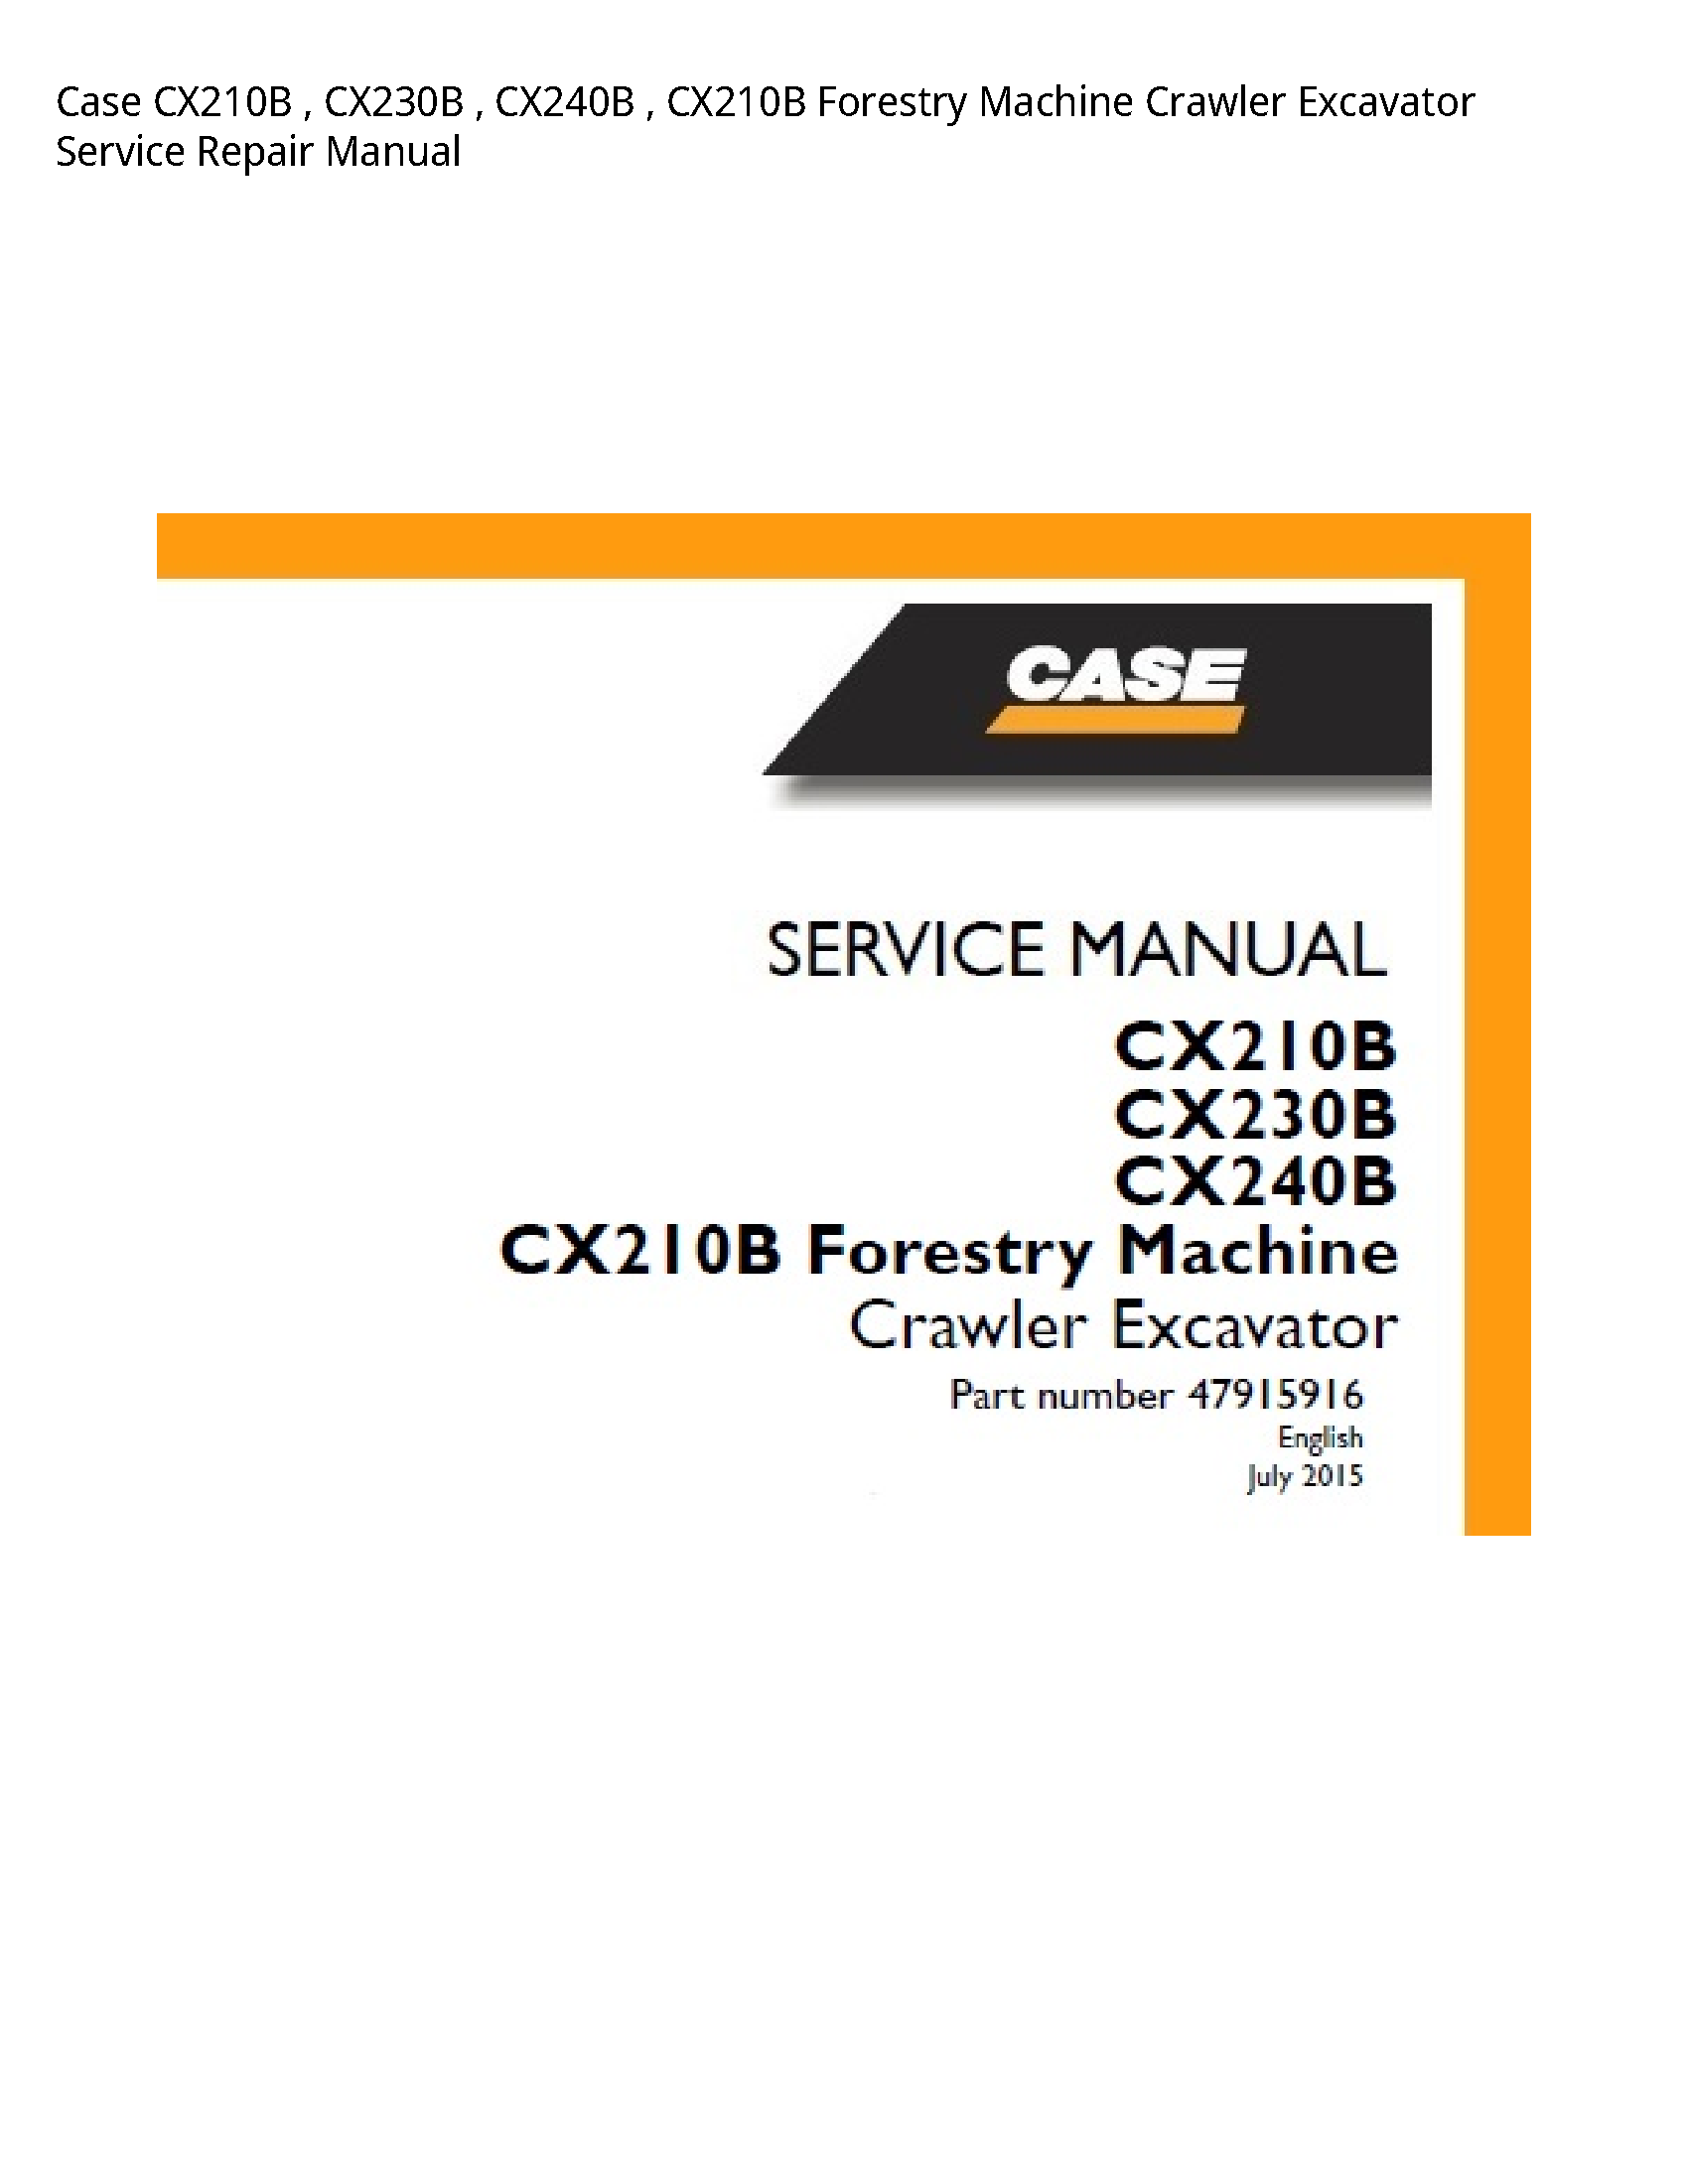 Case/Case IH CX210B Forestry Machine Crawler Excavator manual